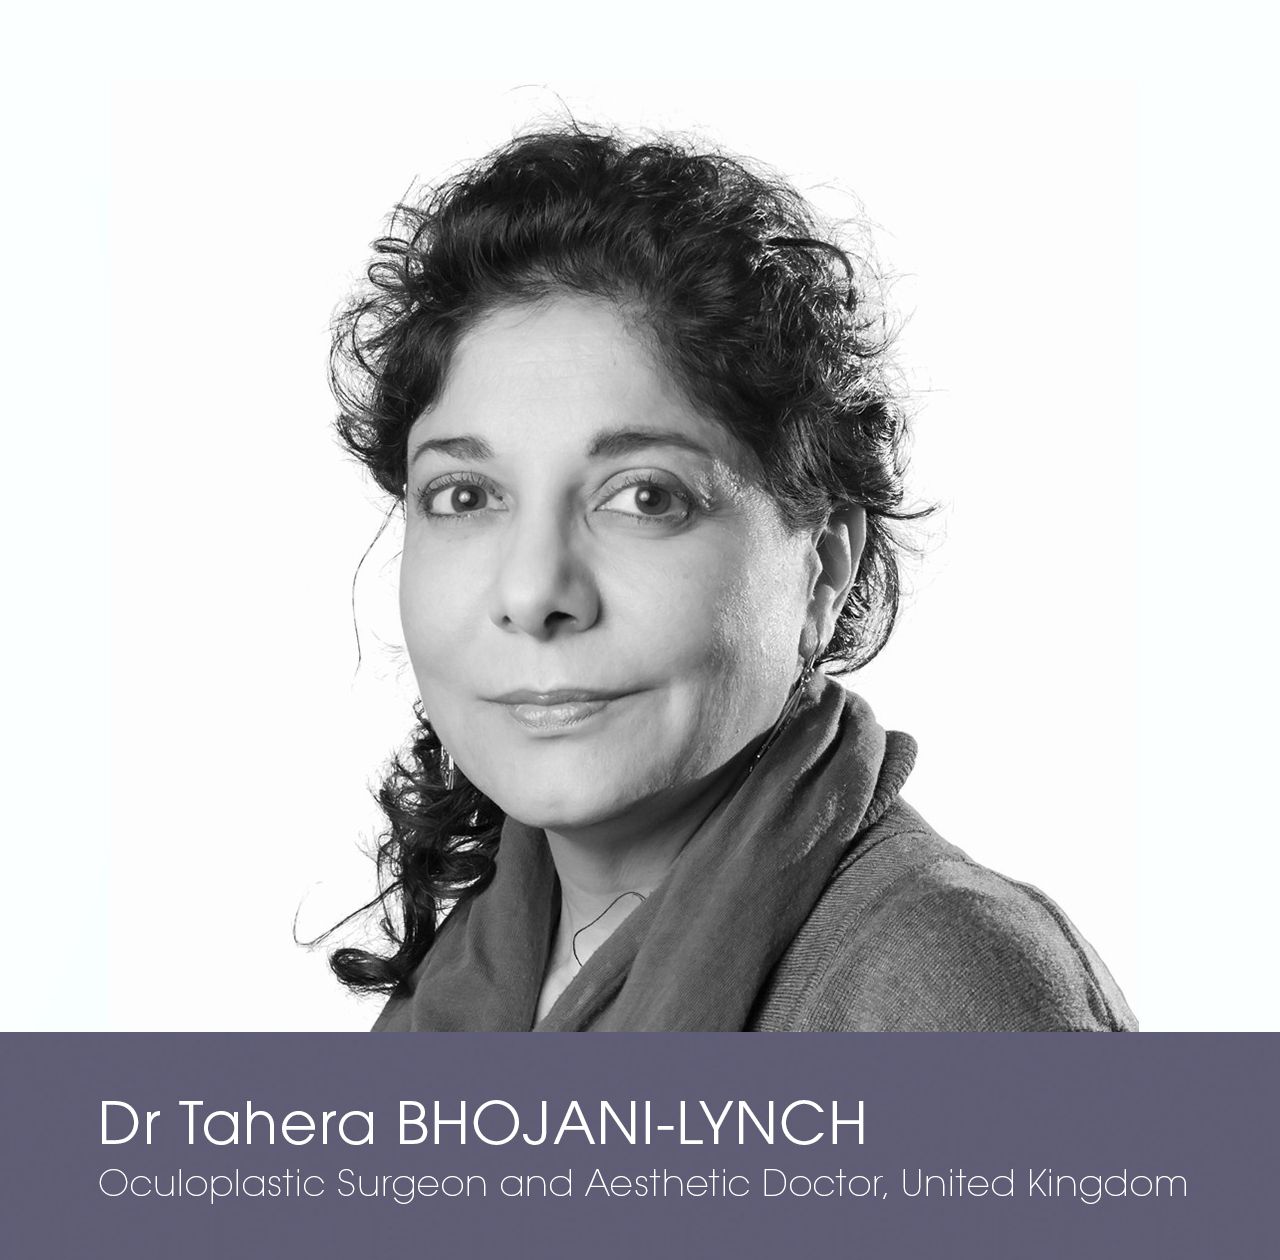 Dr. Tahera BHOJANI-LYNCH